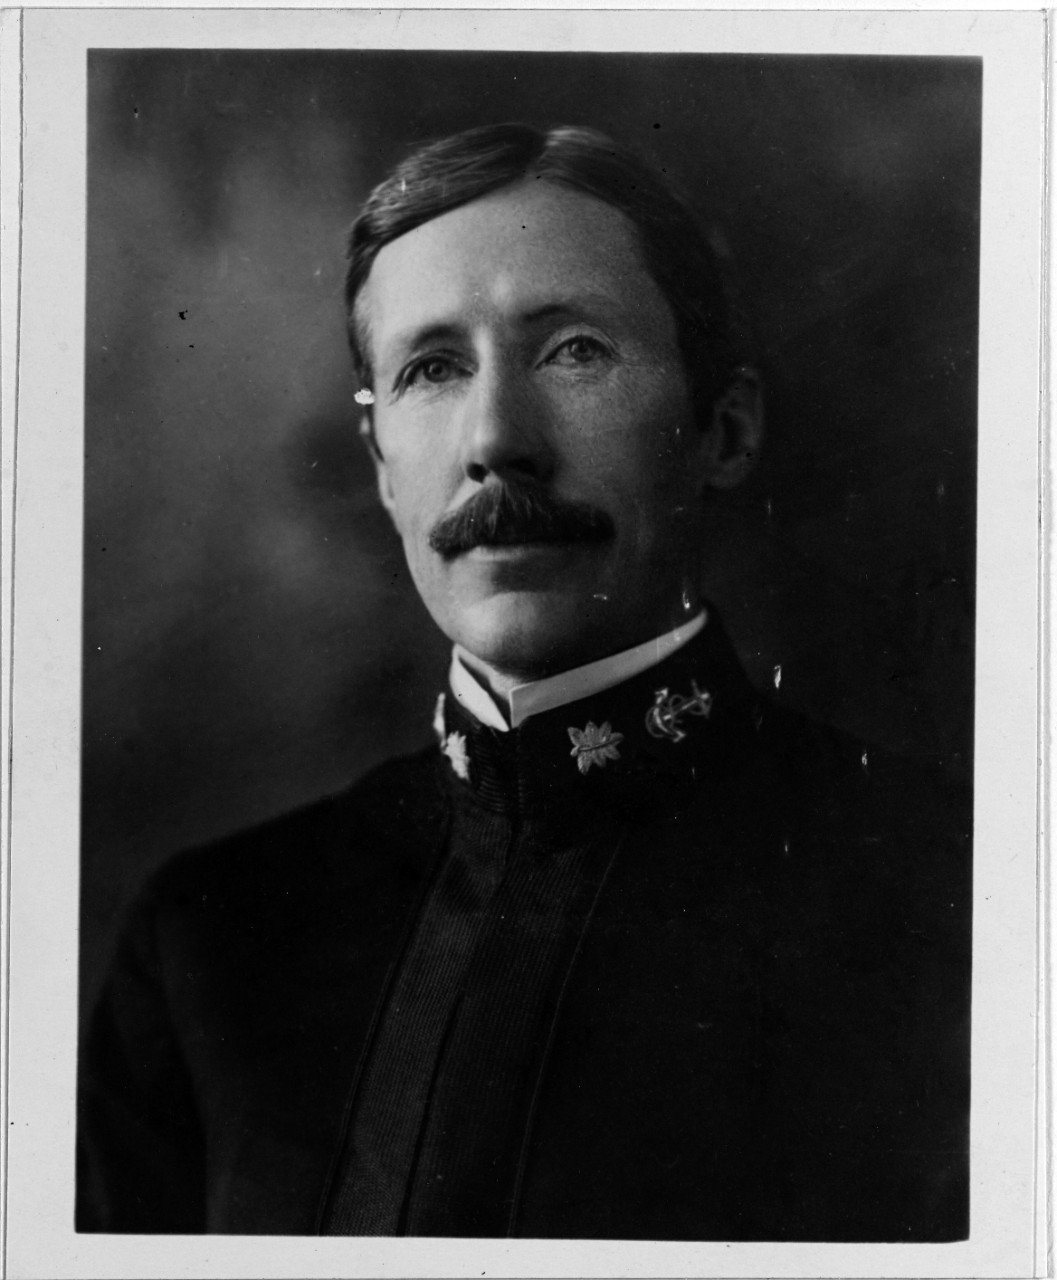 Commander William D. Mac Dougal, USN